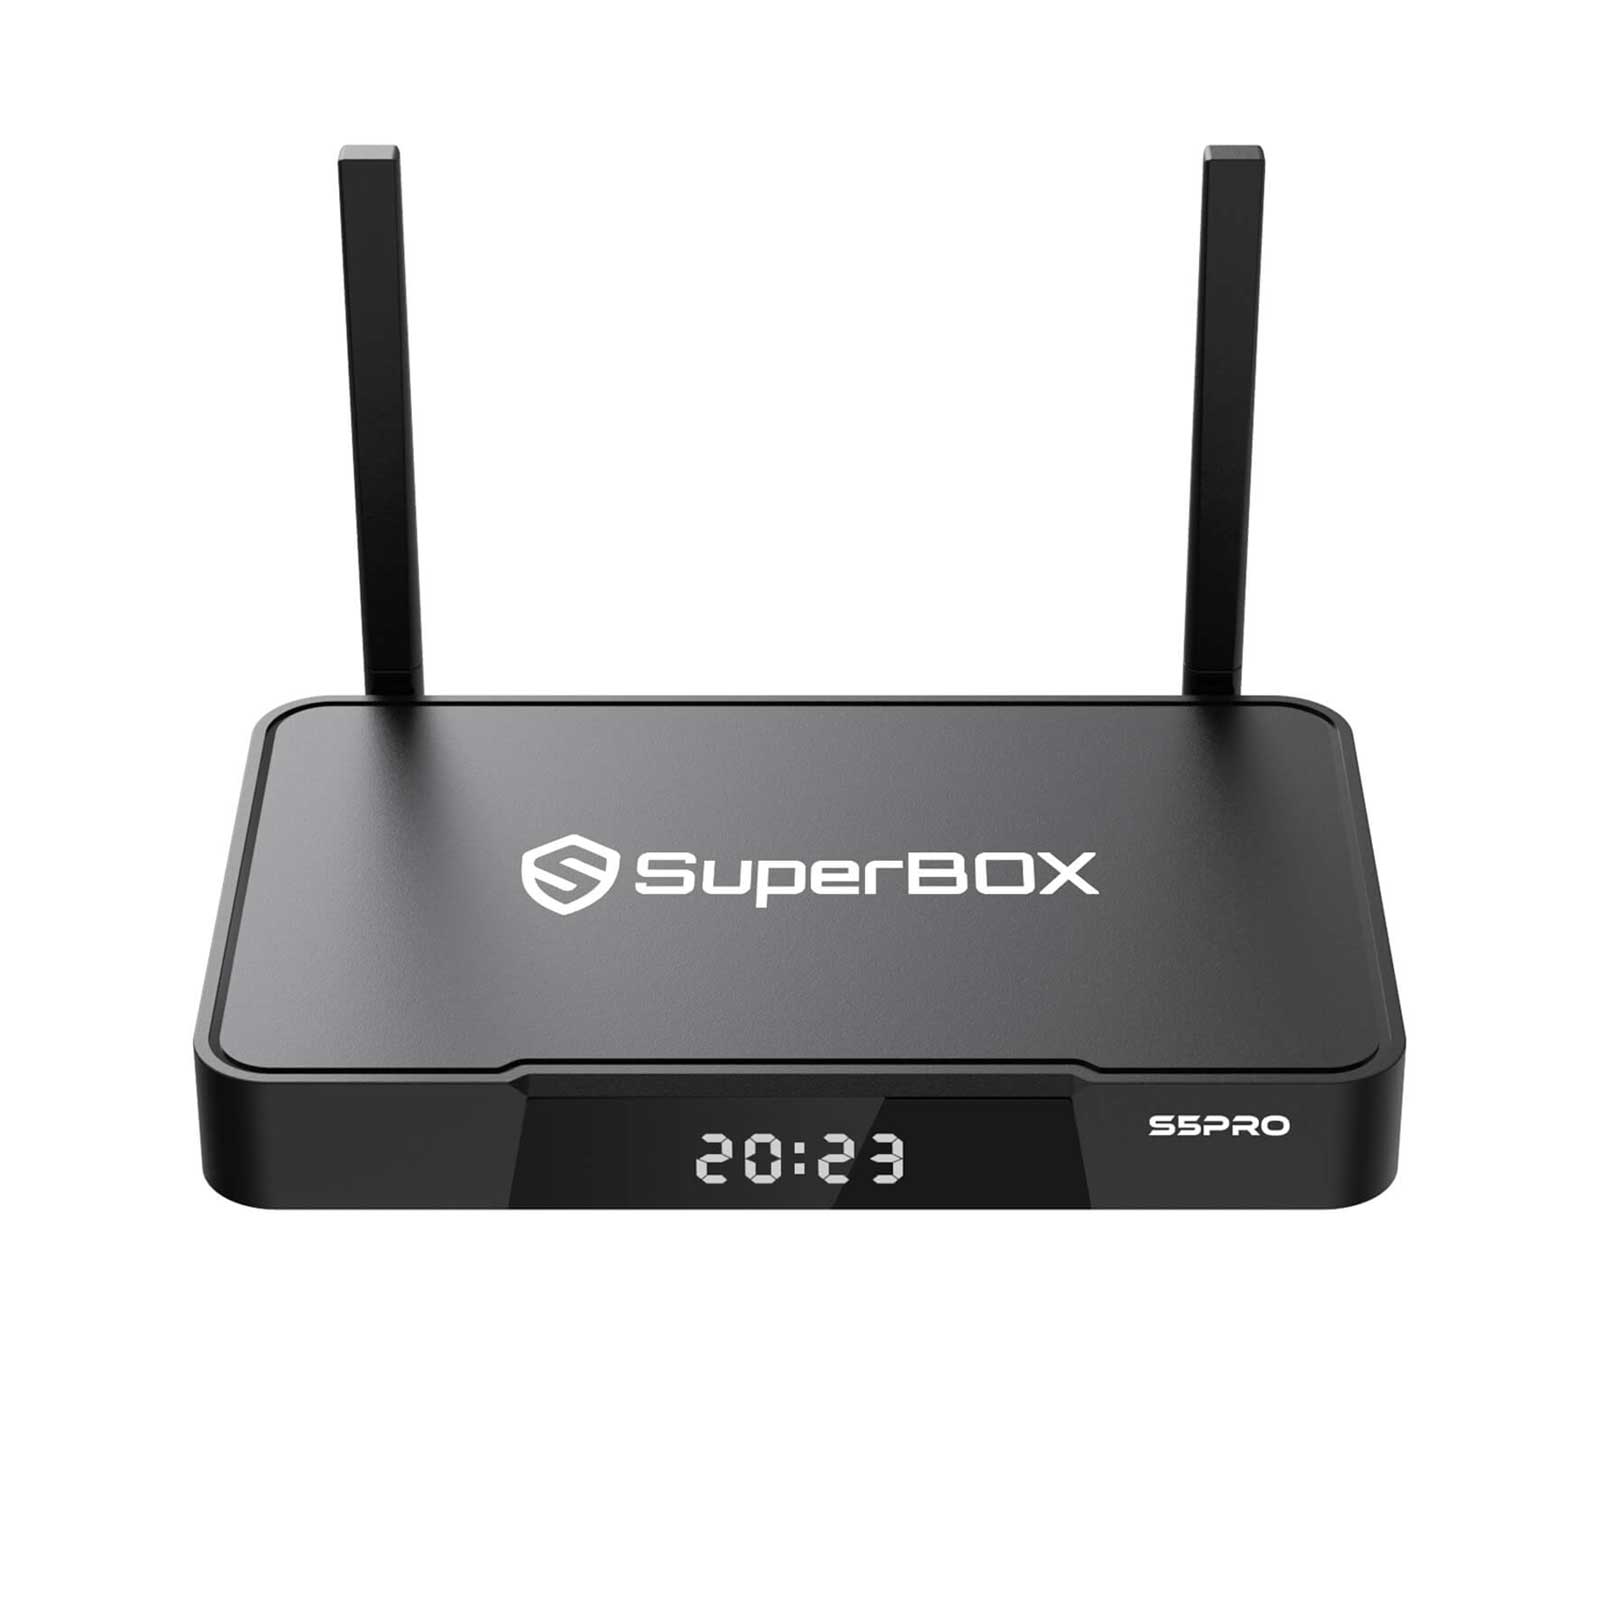 SuperBox S5 Pro (New)